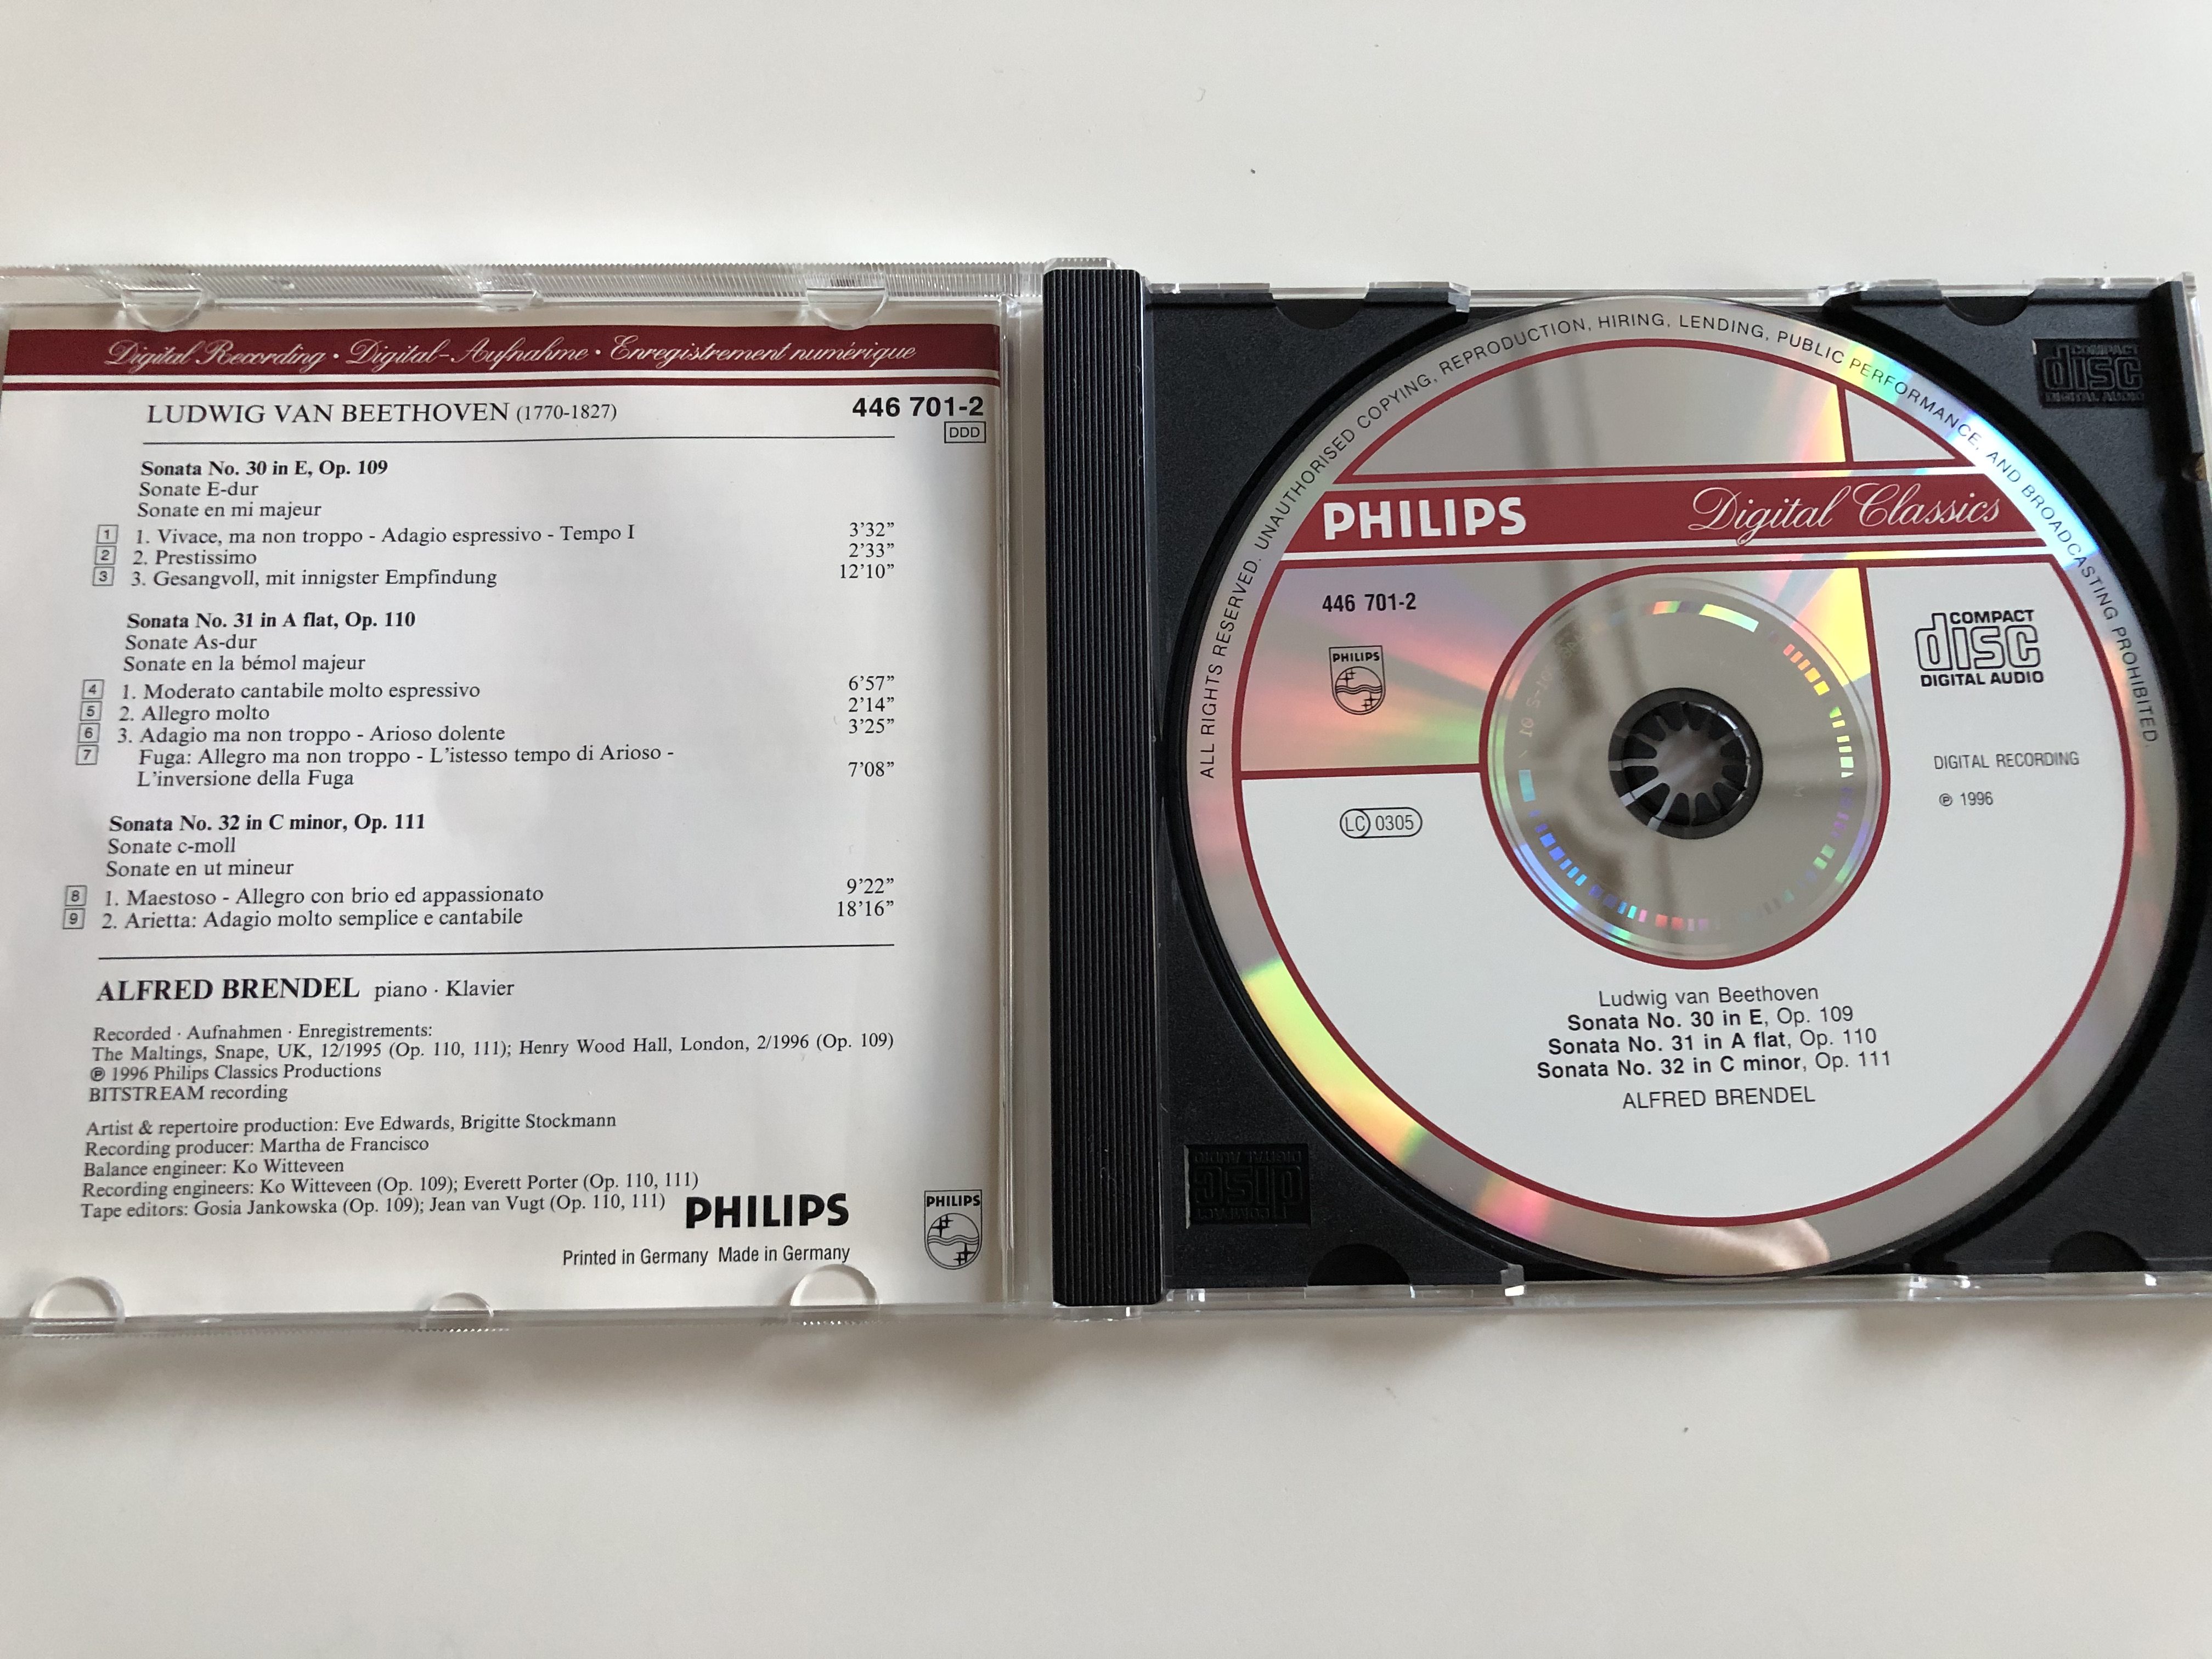 beethoven-piano-sonatas-op.-109-110-111-alfred-brendel-philips-classics-audio-cd-1996-446-701-2-2-.jpg